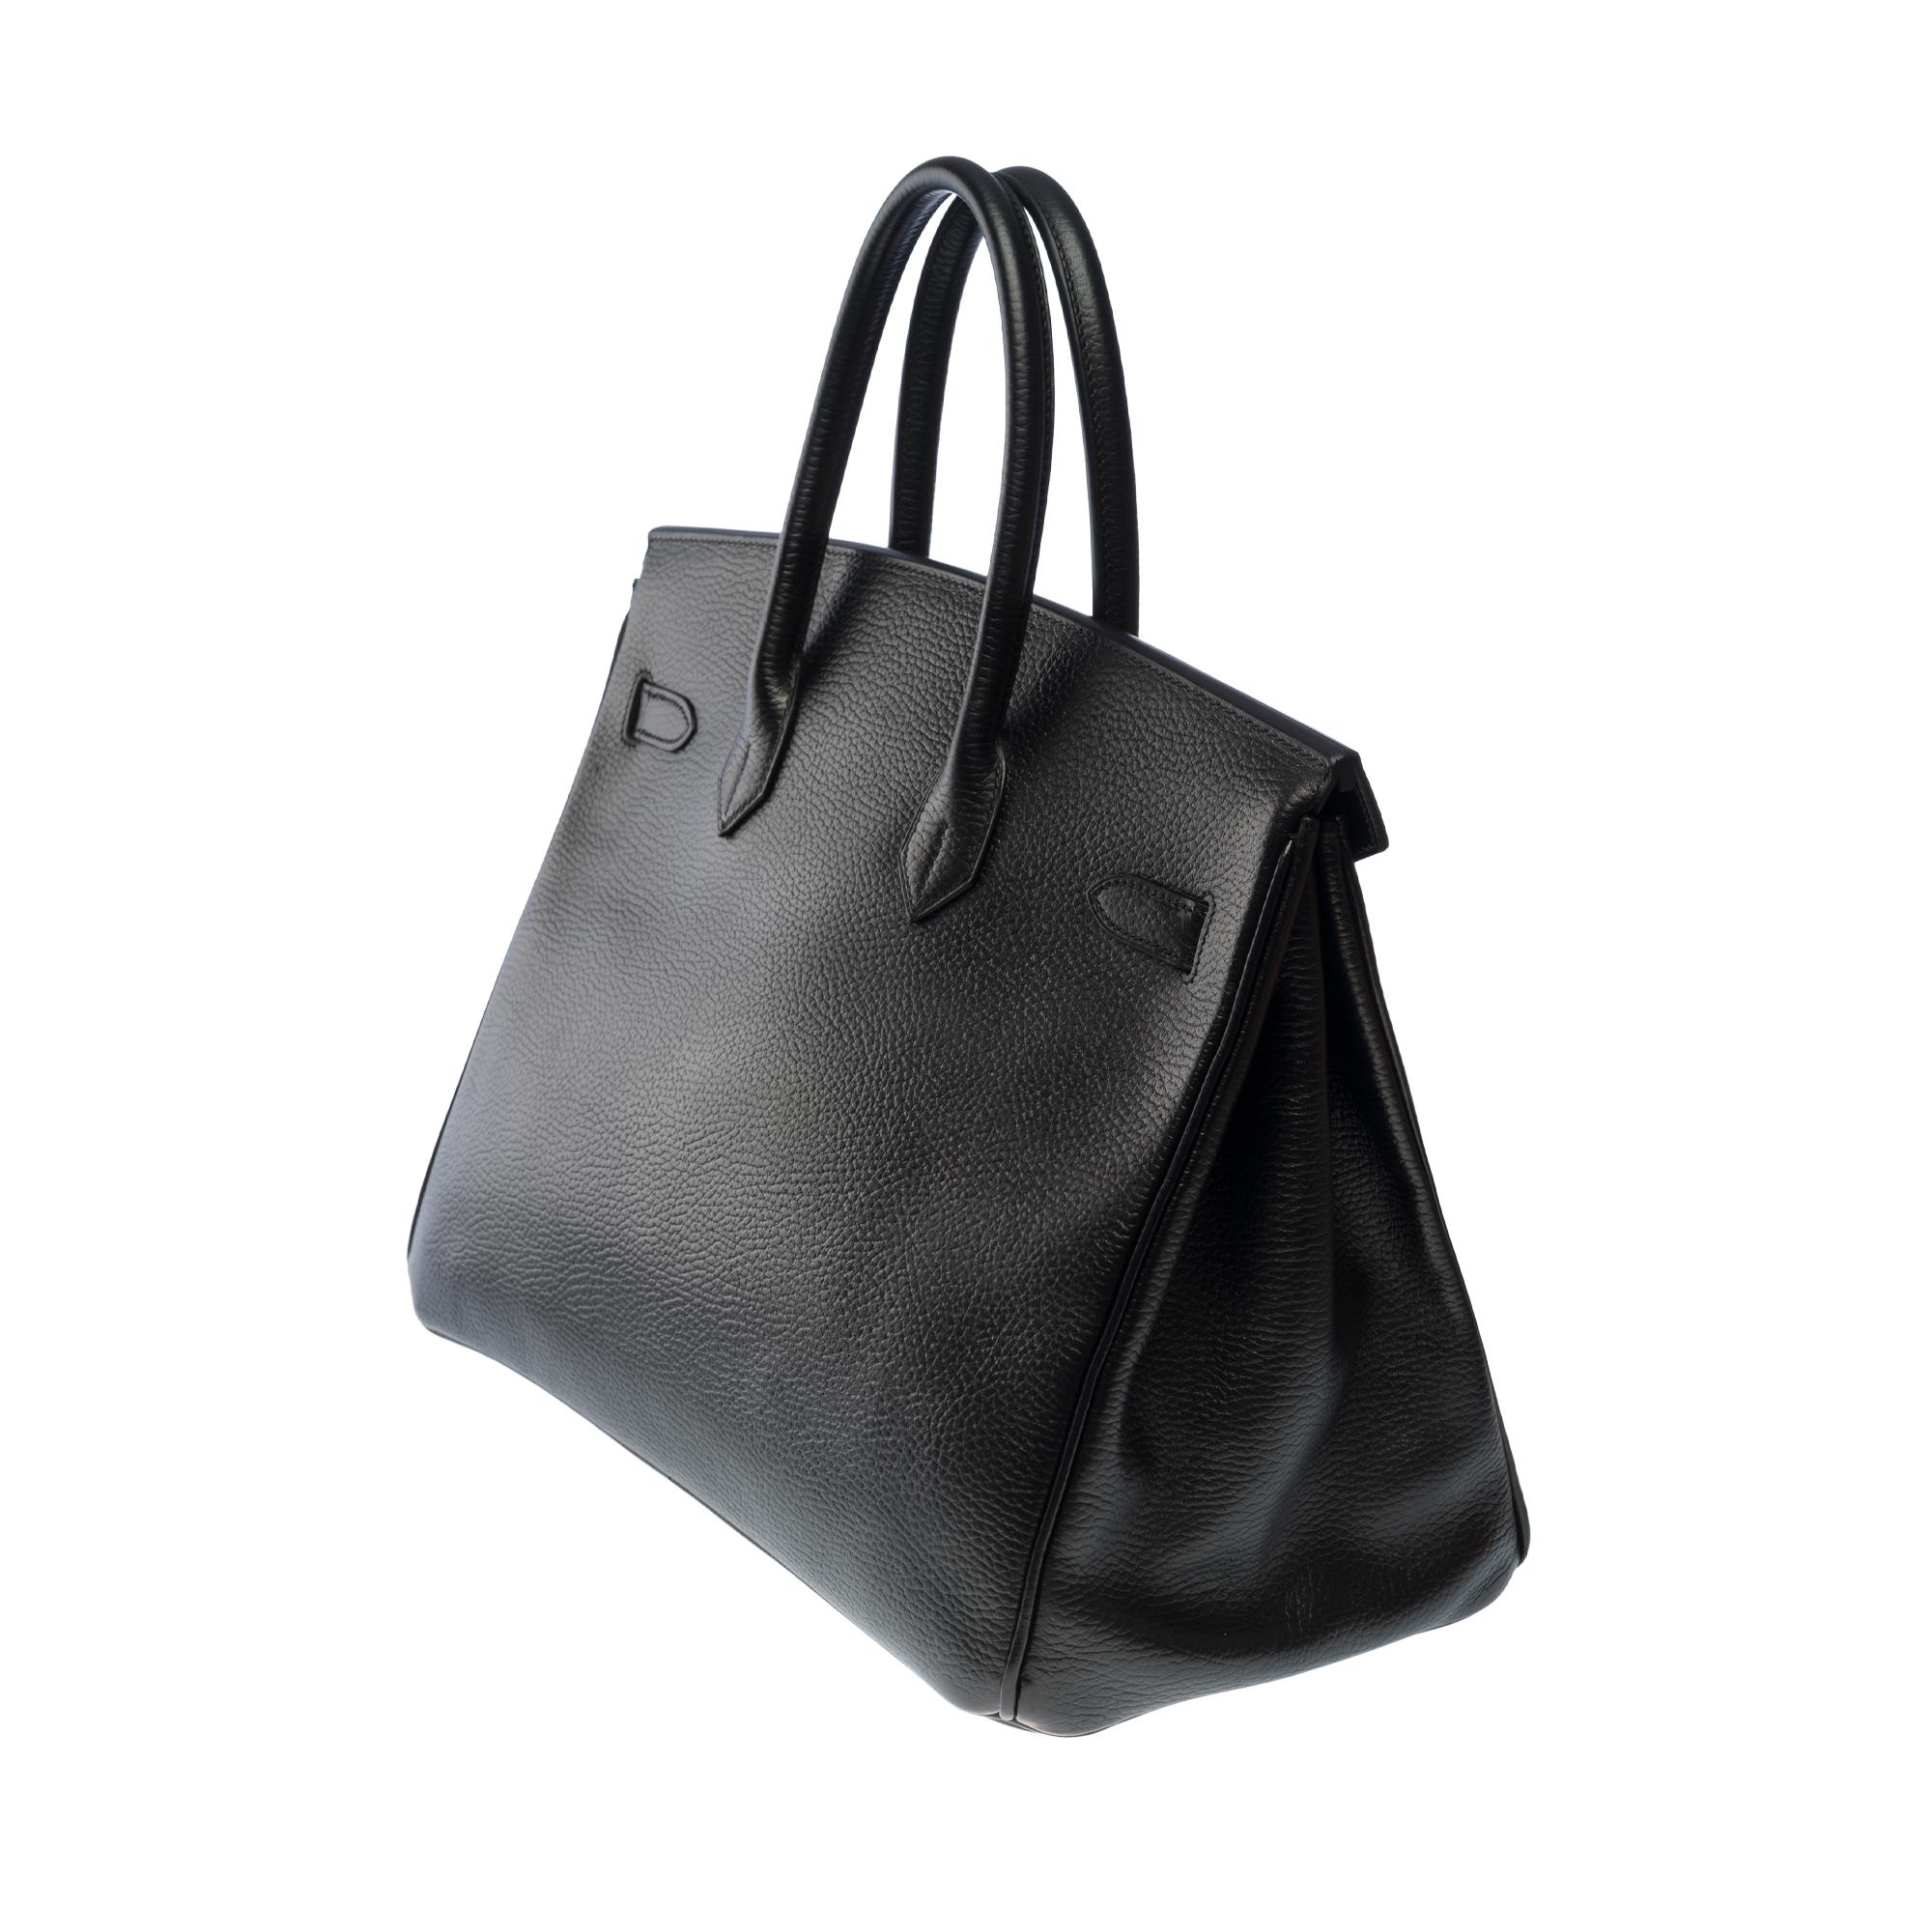 Women's or Men's Amazing Hermès Birkin 35 handbag in black Togo leather, GHW